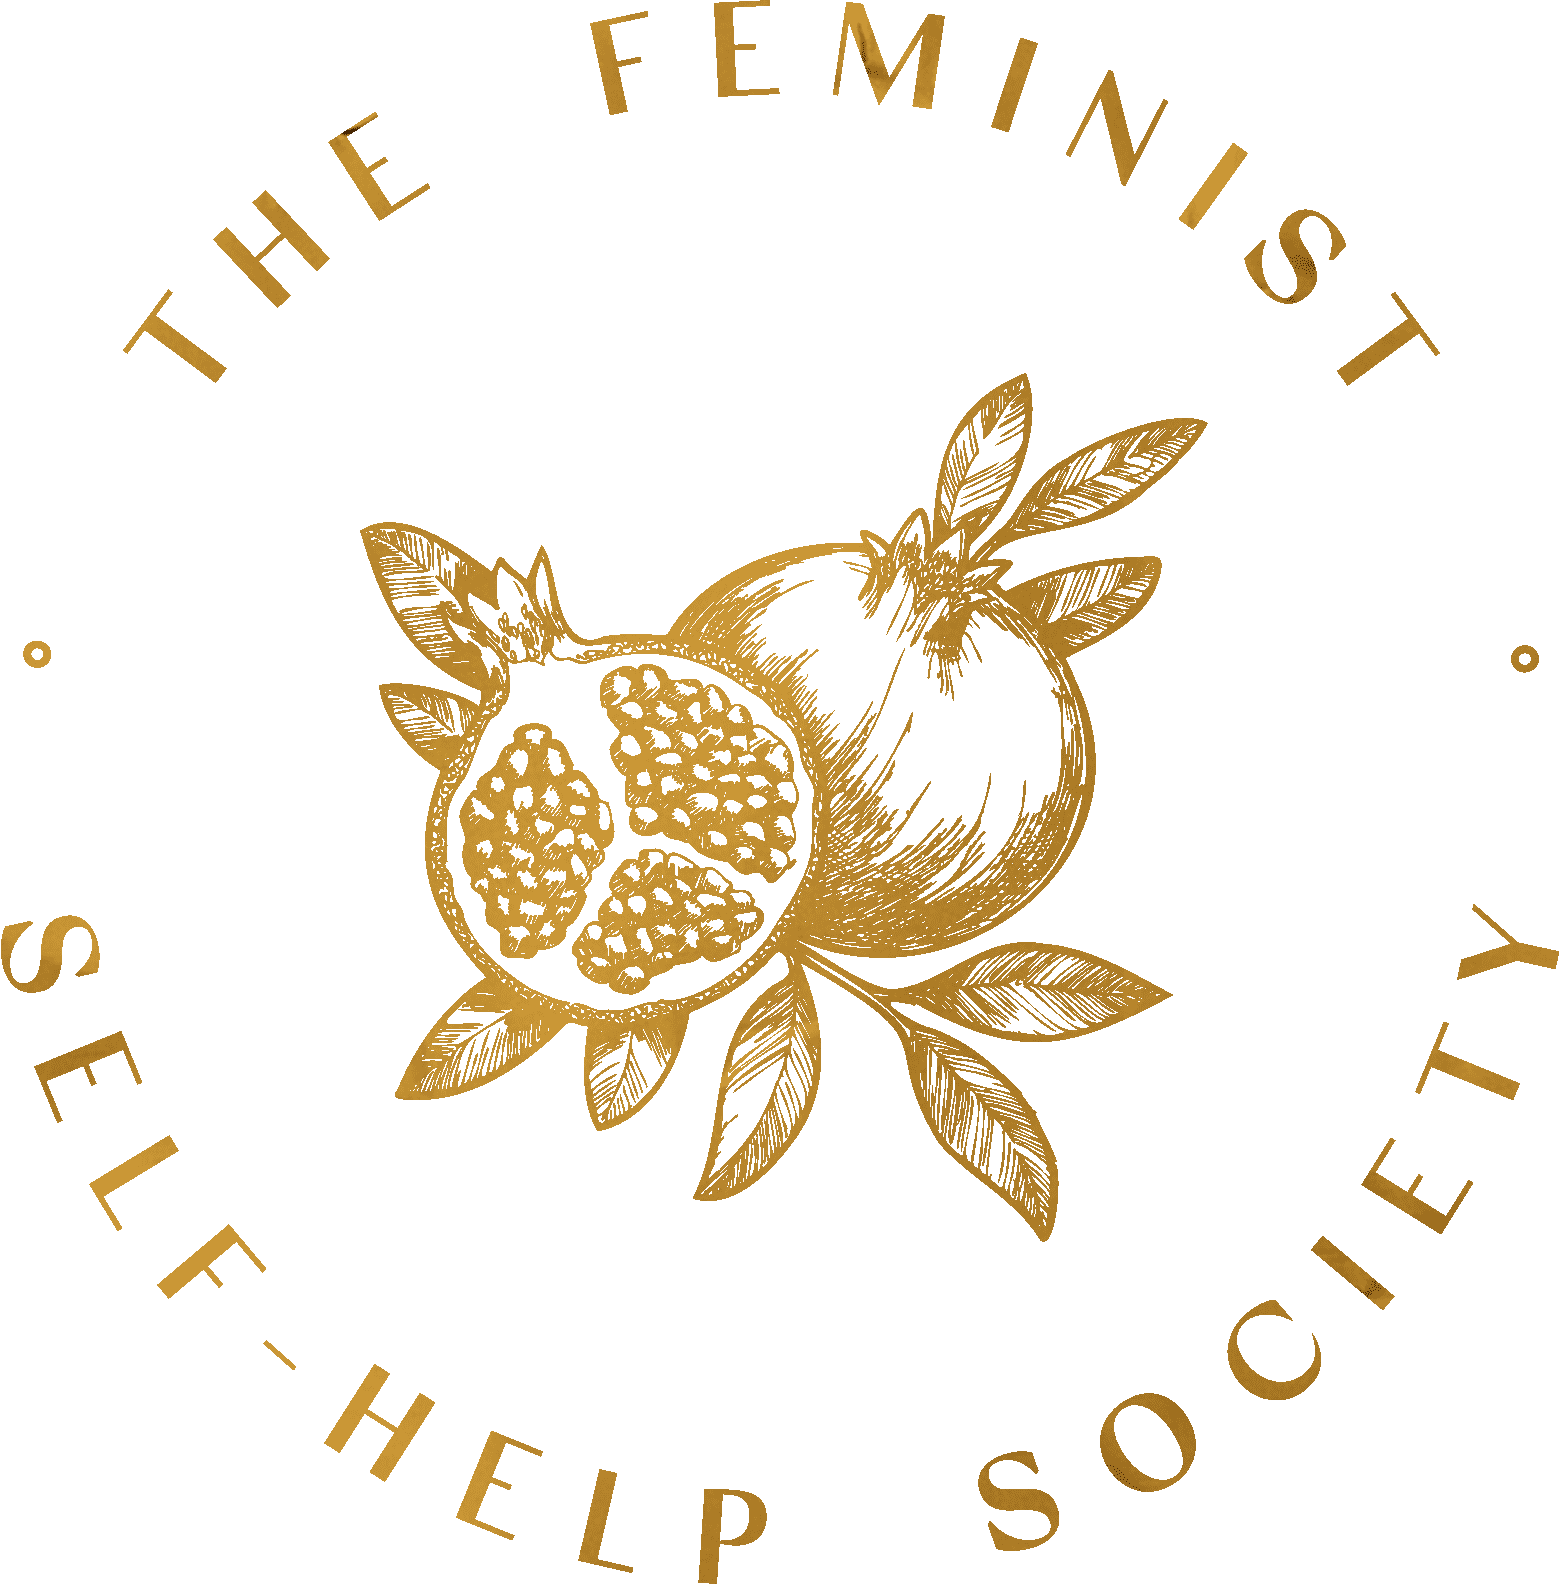 The Feminist Self-Help Society